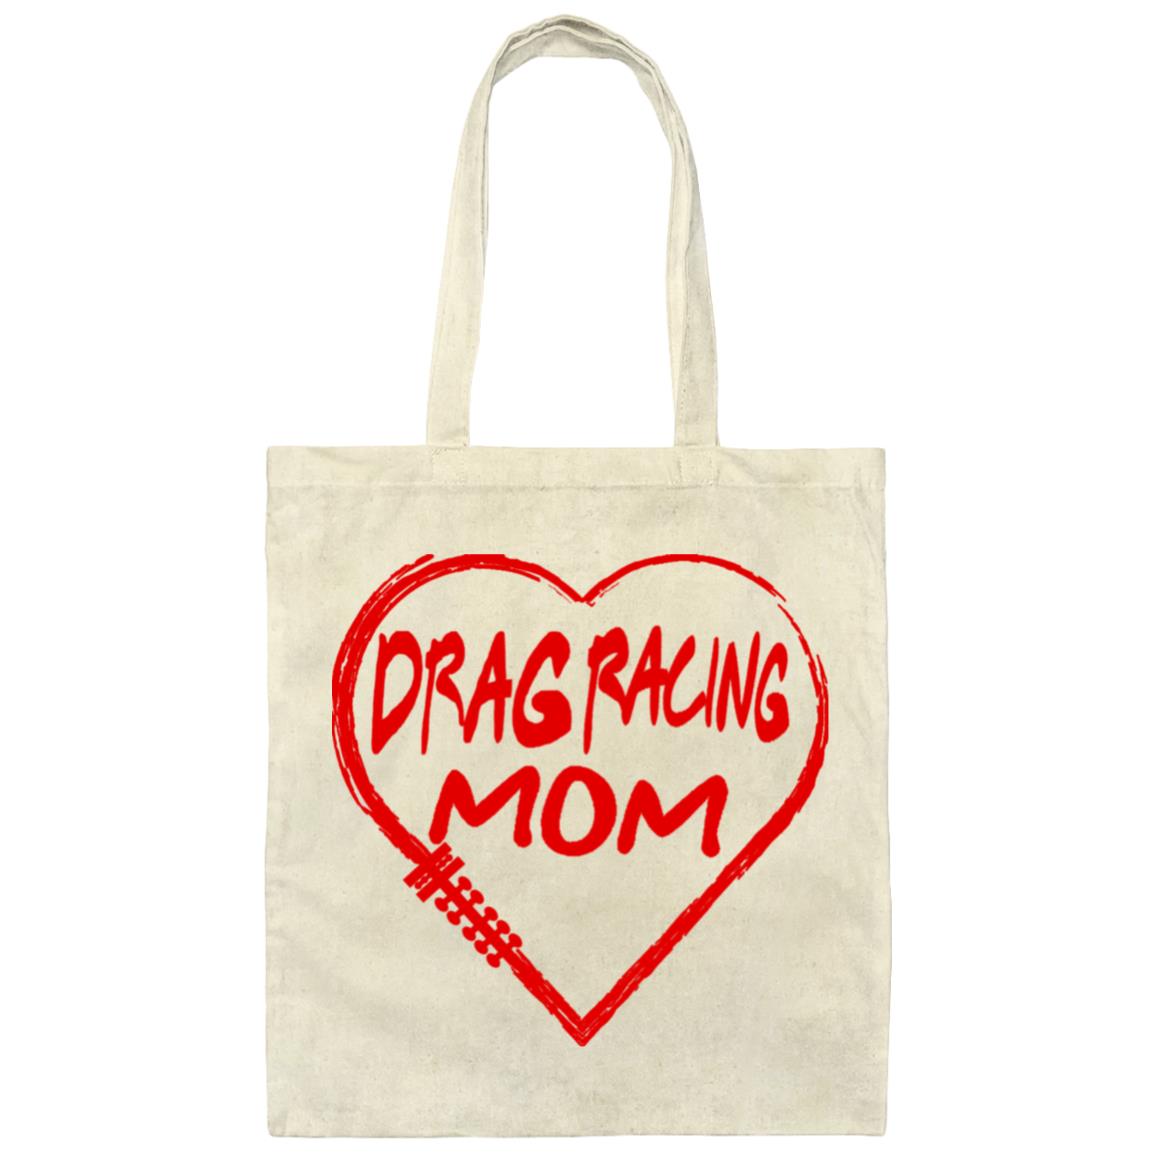 Drag Racing Mom Heart Canvas Tote Bag